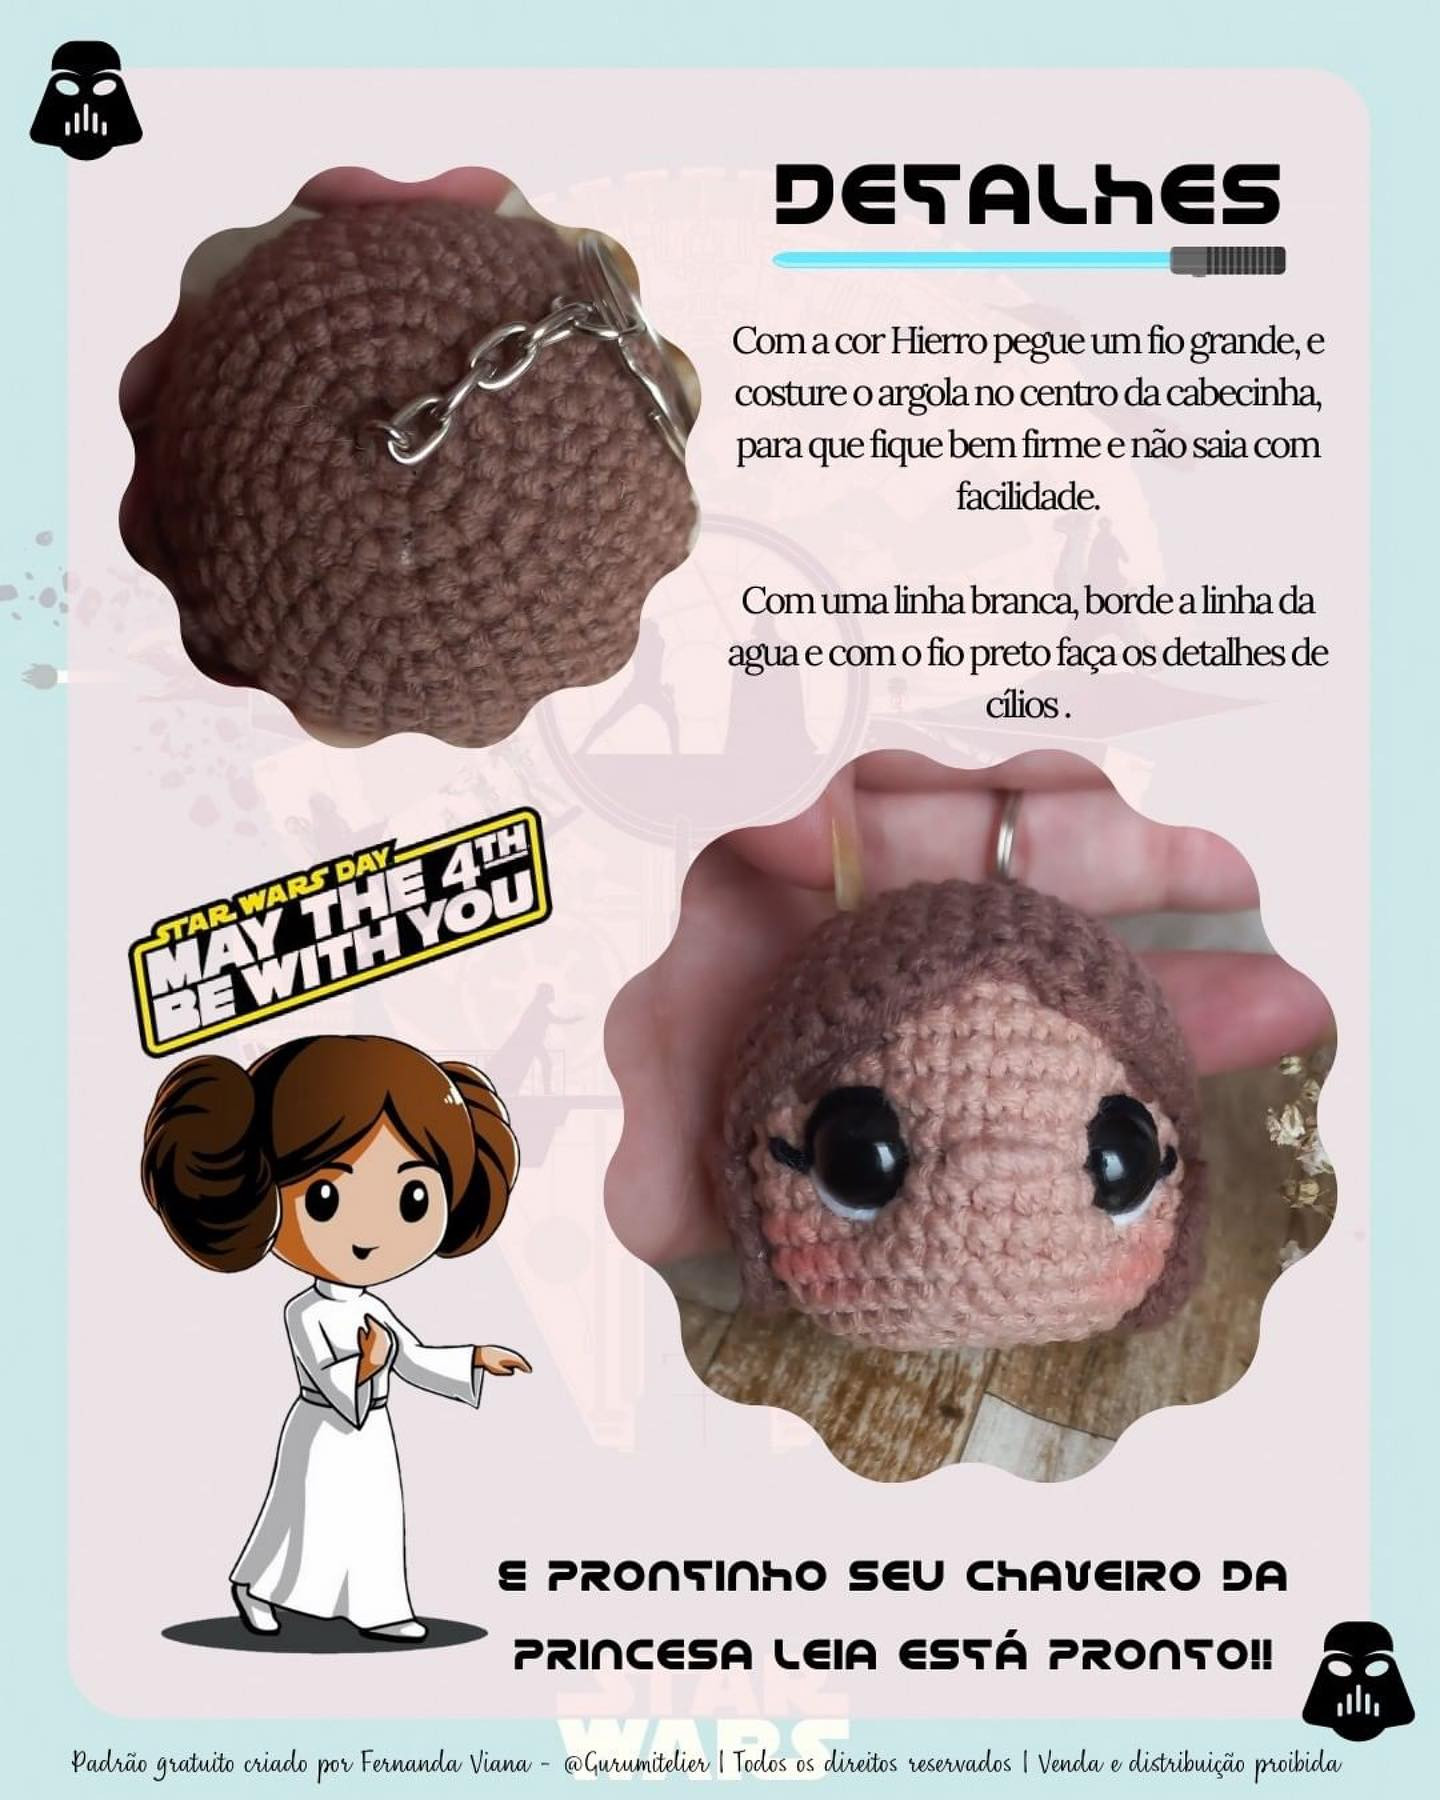 crochet pattern brown hair doll head keychain